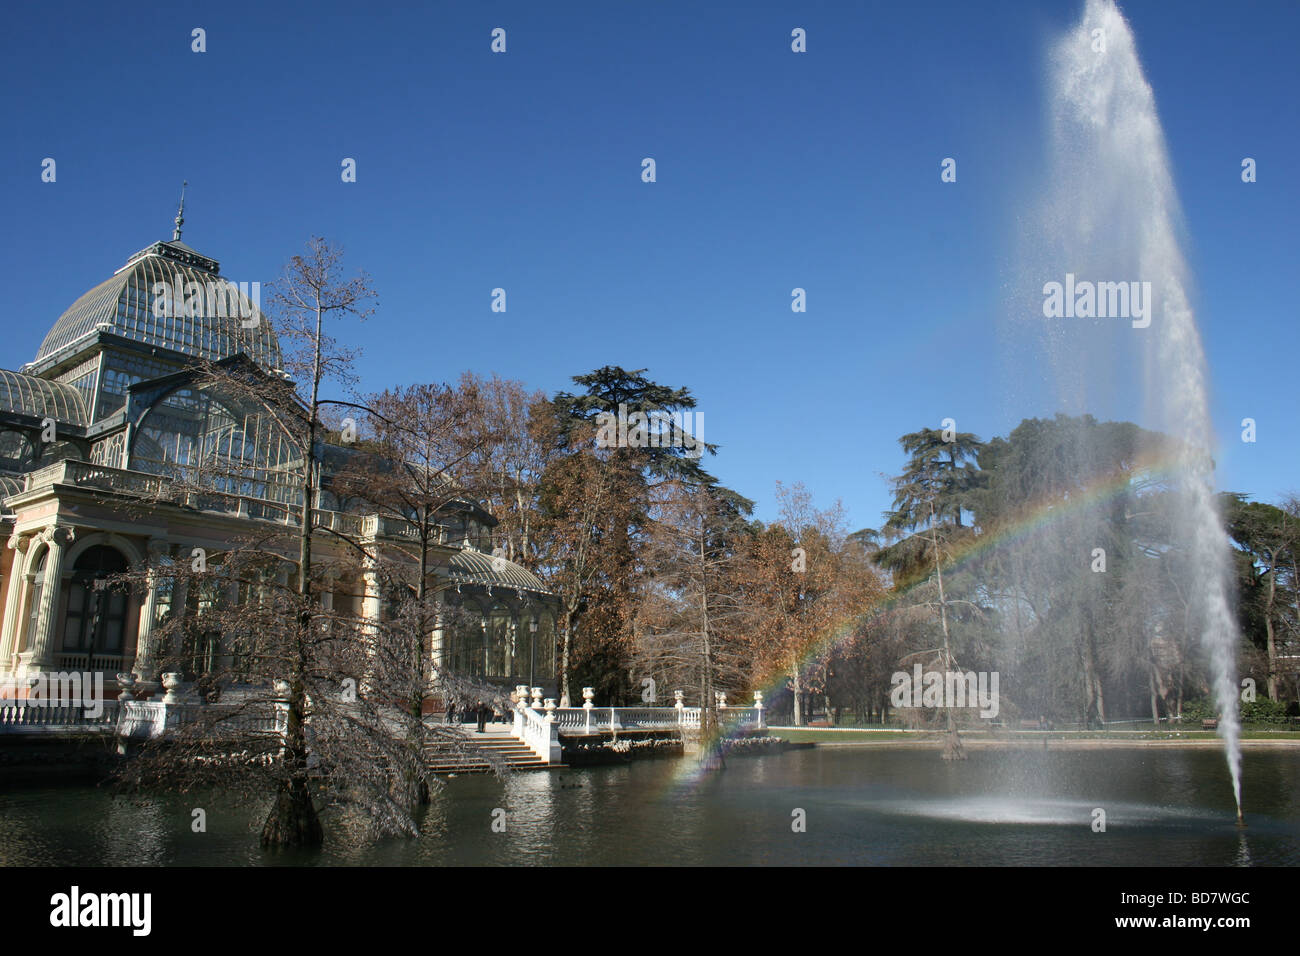 Water fountain in front of the Palacio de Cristal in Retiro Park, Madrid, Spain Stock Photo